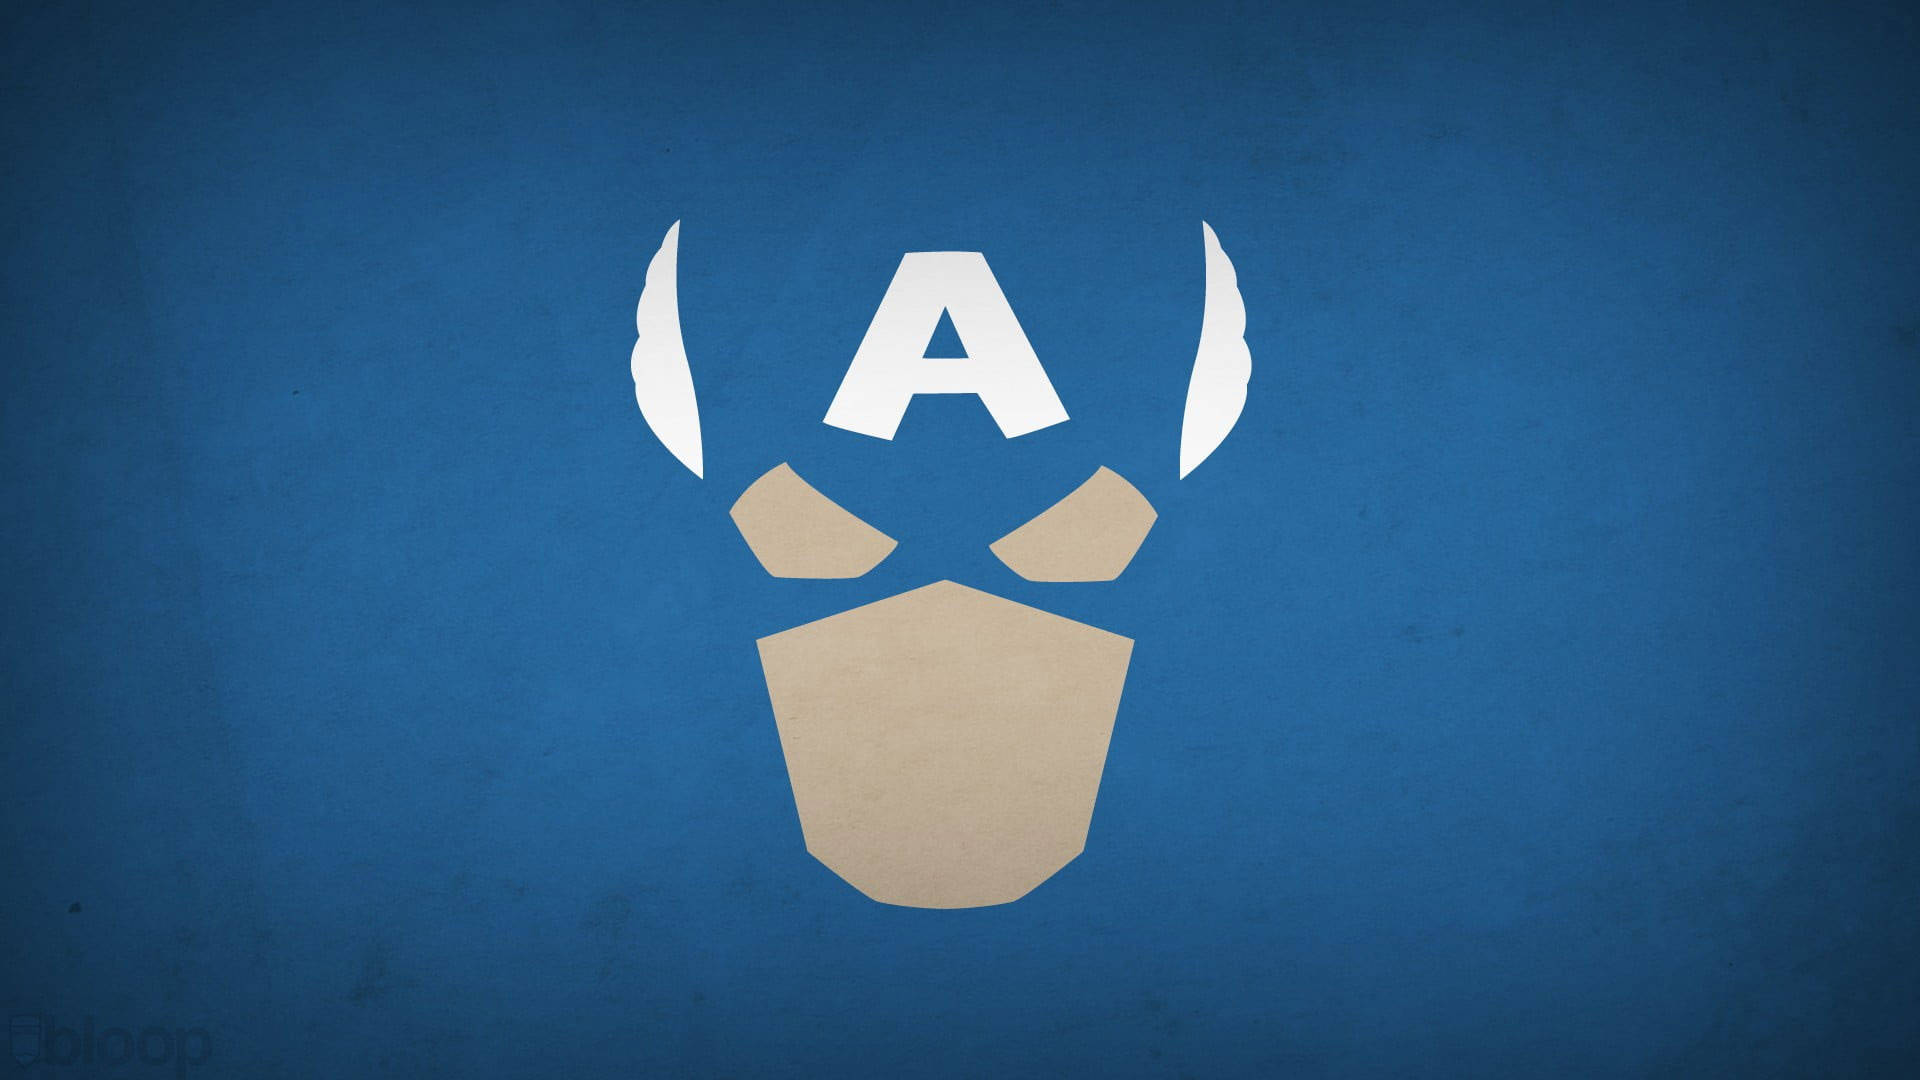 Captain America-logo på en blå baggrund. Wallpaper